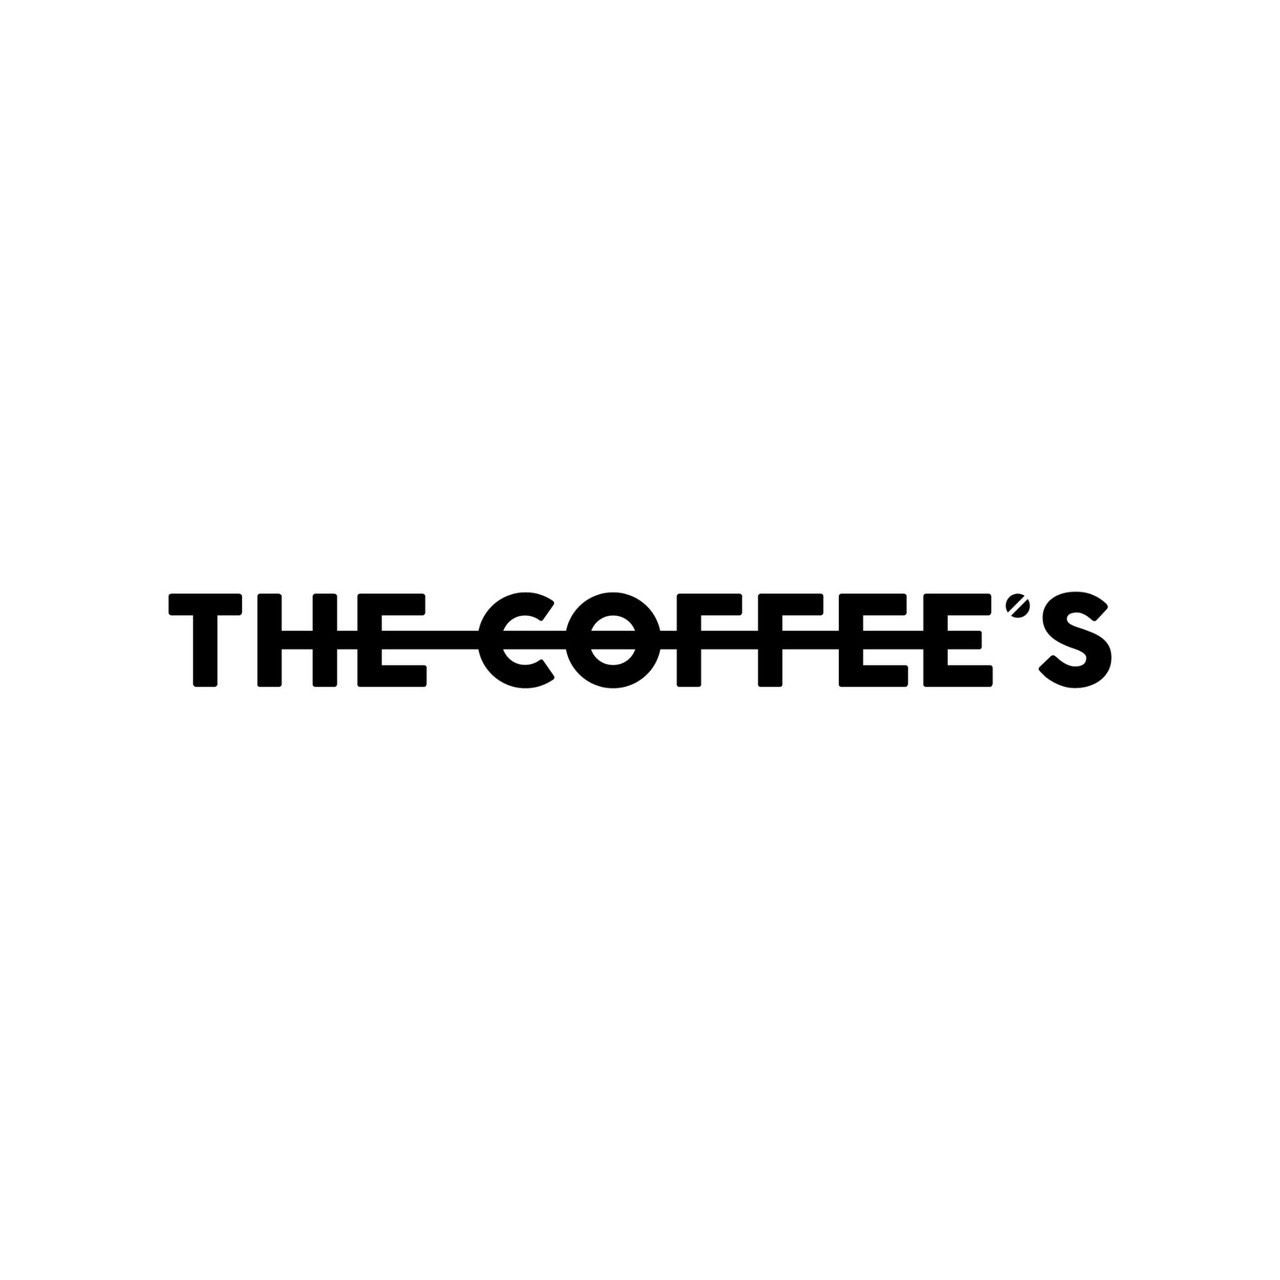 THE COFFEE'Sの写真